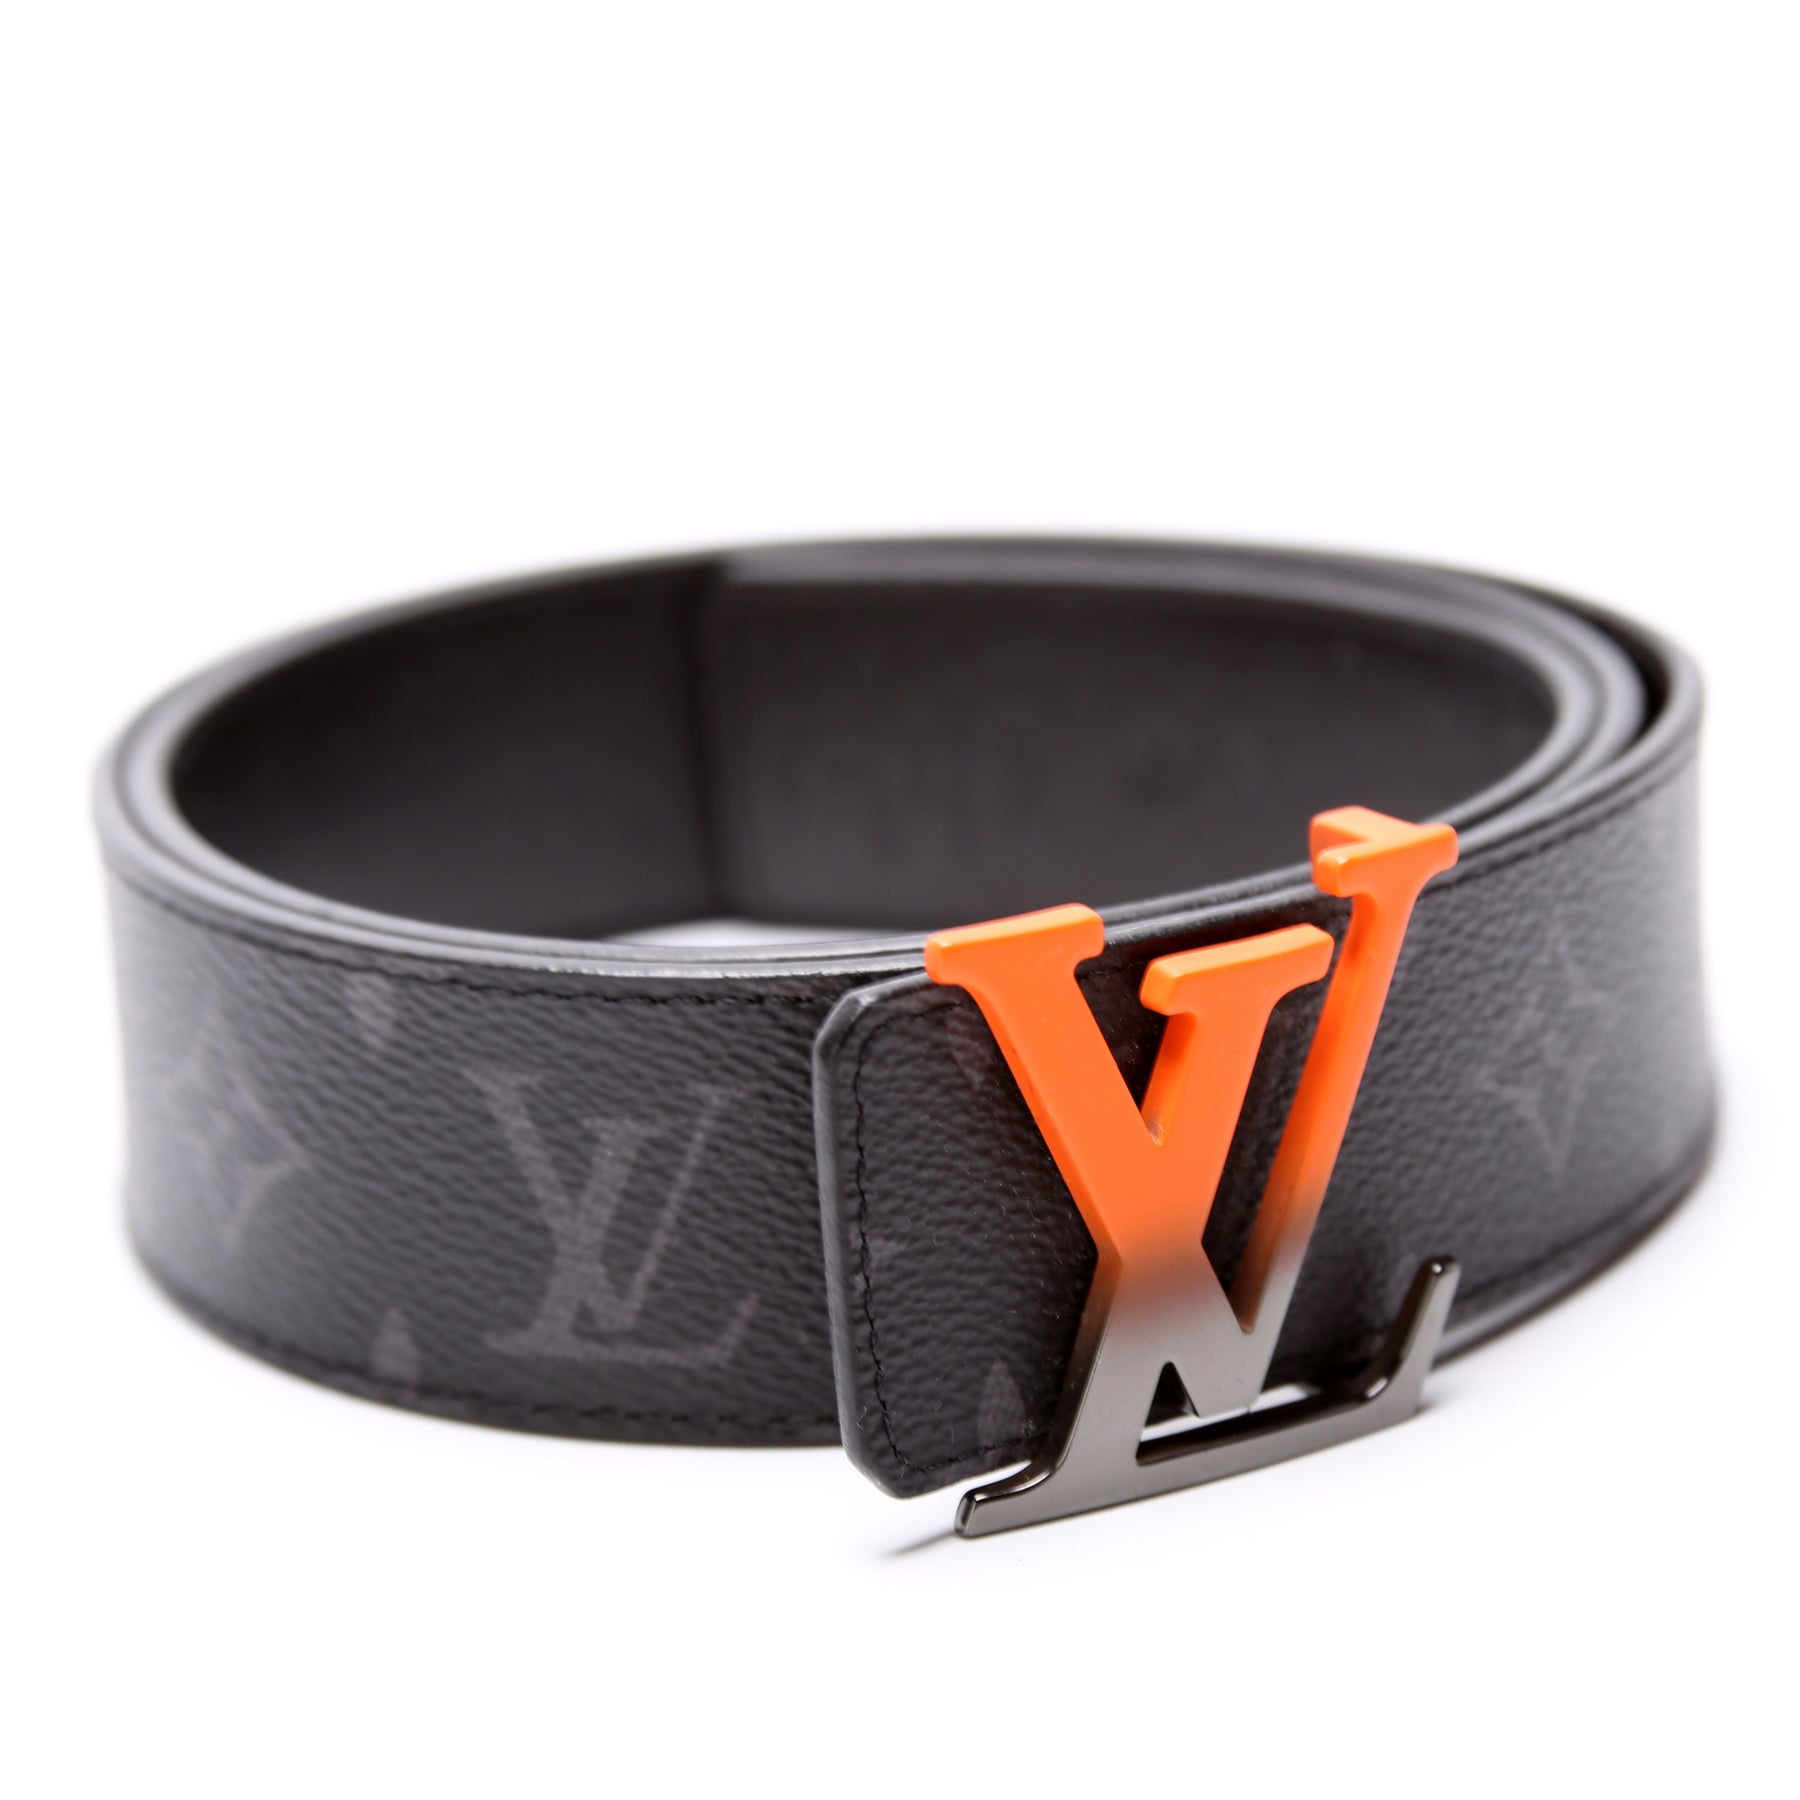 Louis Vuitton LV Initiales Silver Buckle Belt Monogram 40mm Brown/Black